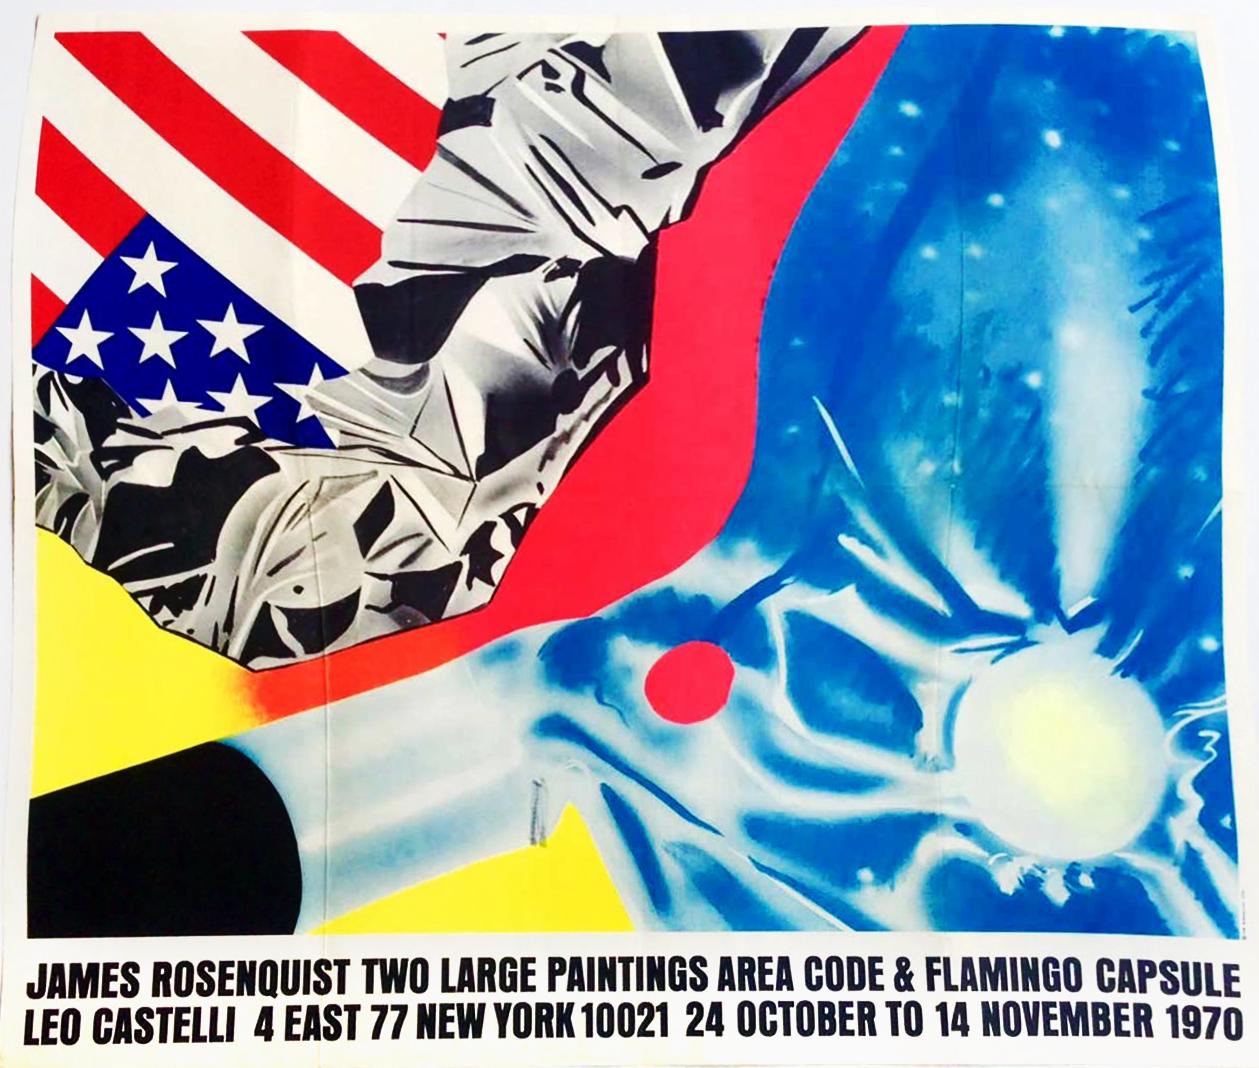 James Rosenquist exhibition poster 1970 (vintage James Rosenquist) - Print by (after) James Rosenquist